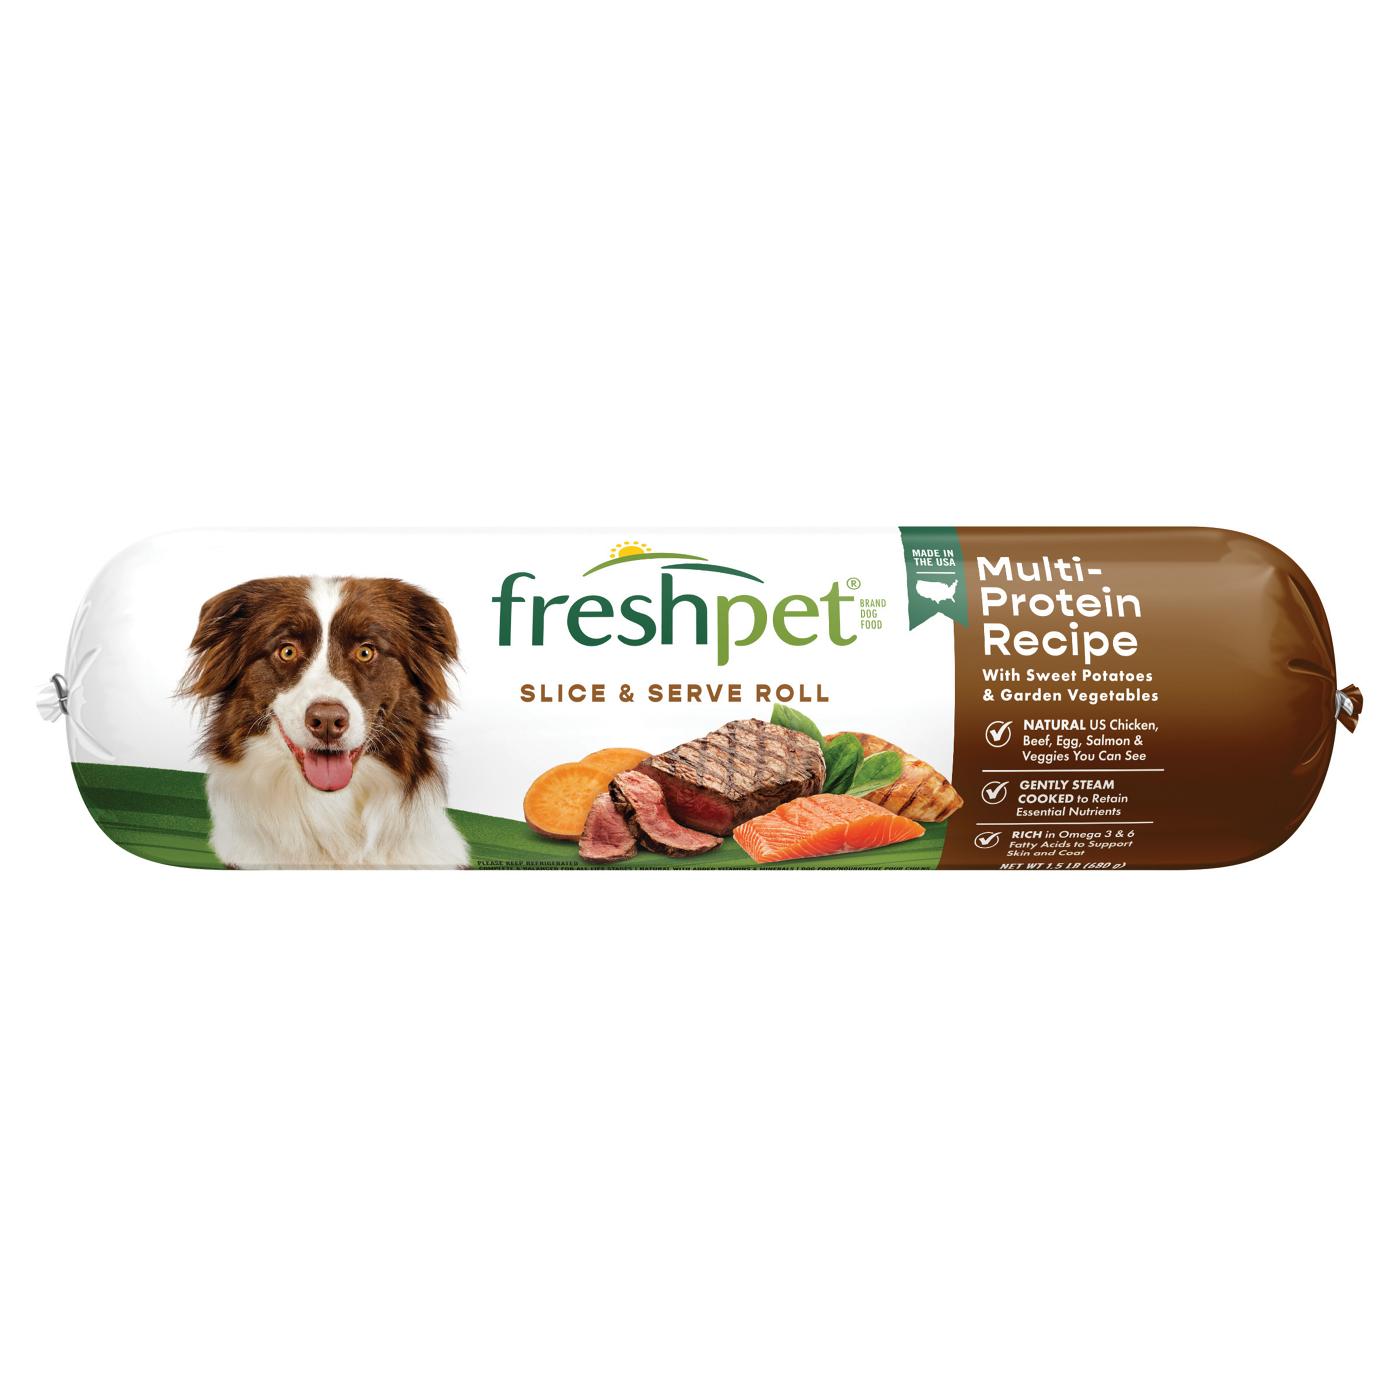 Freshpet Slice & Serve Multi-Protein Fresh Dog Food; image 1 of 9